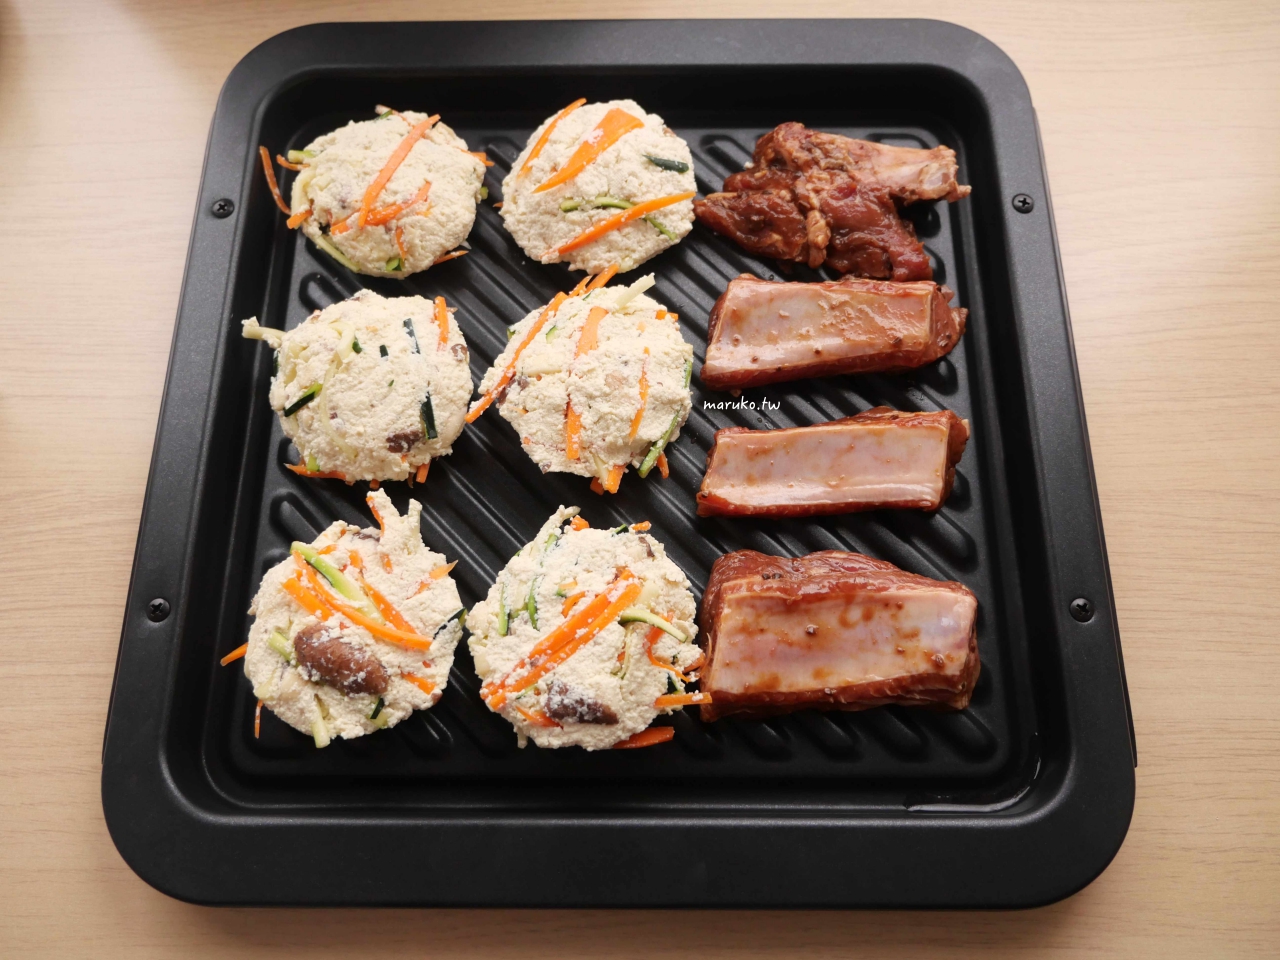 Panasonic 蒸烘烤微波爐(NN-BS607) 食譜分享韓式大醬豬肋排及蔬菜煎餅、脆皮肉桂司康， 聚餐派對料理、烘焙點心一機搞定！ @Maruko與美食有個約會